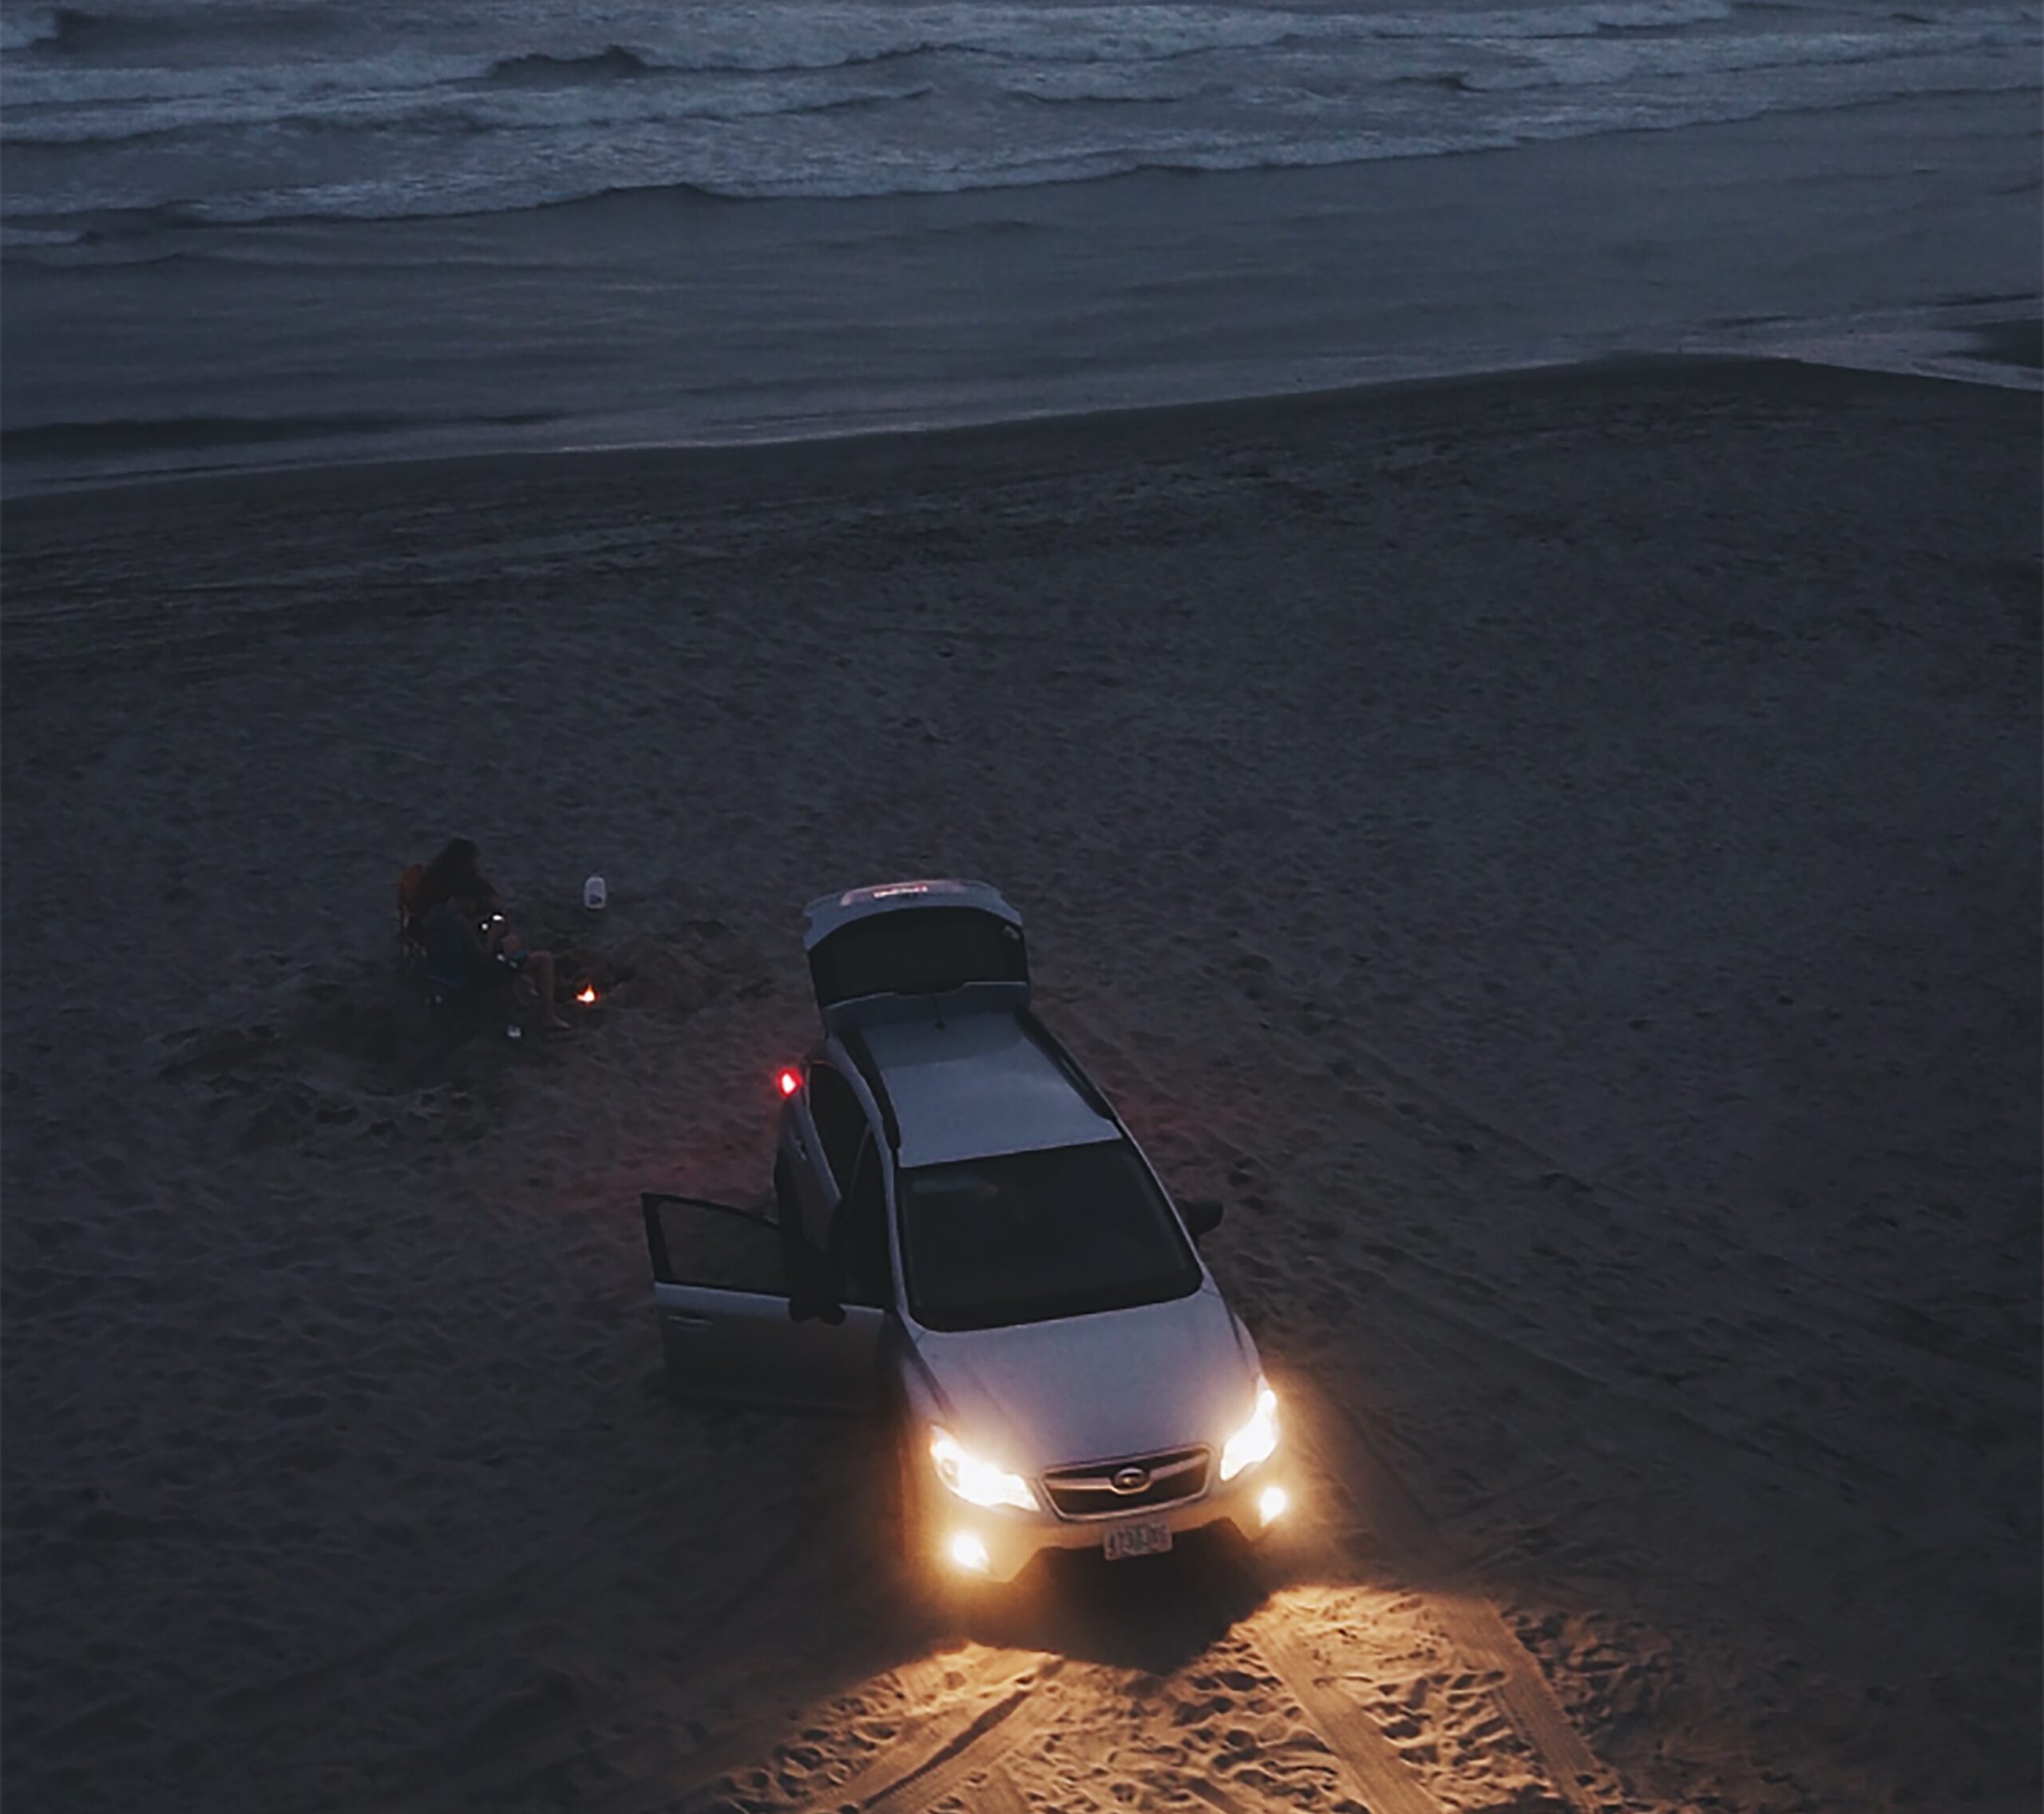 Subaru off road in the sand